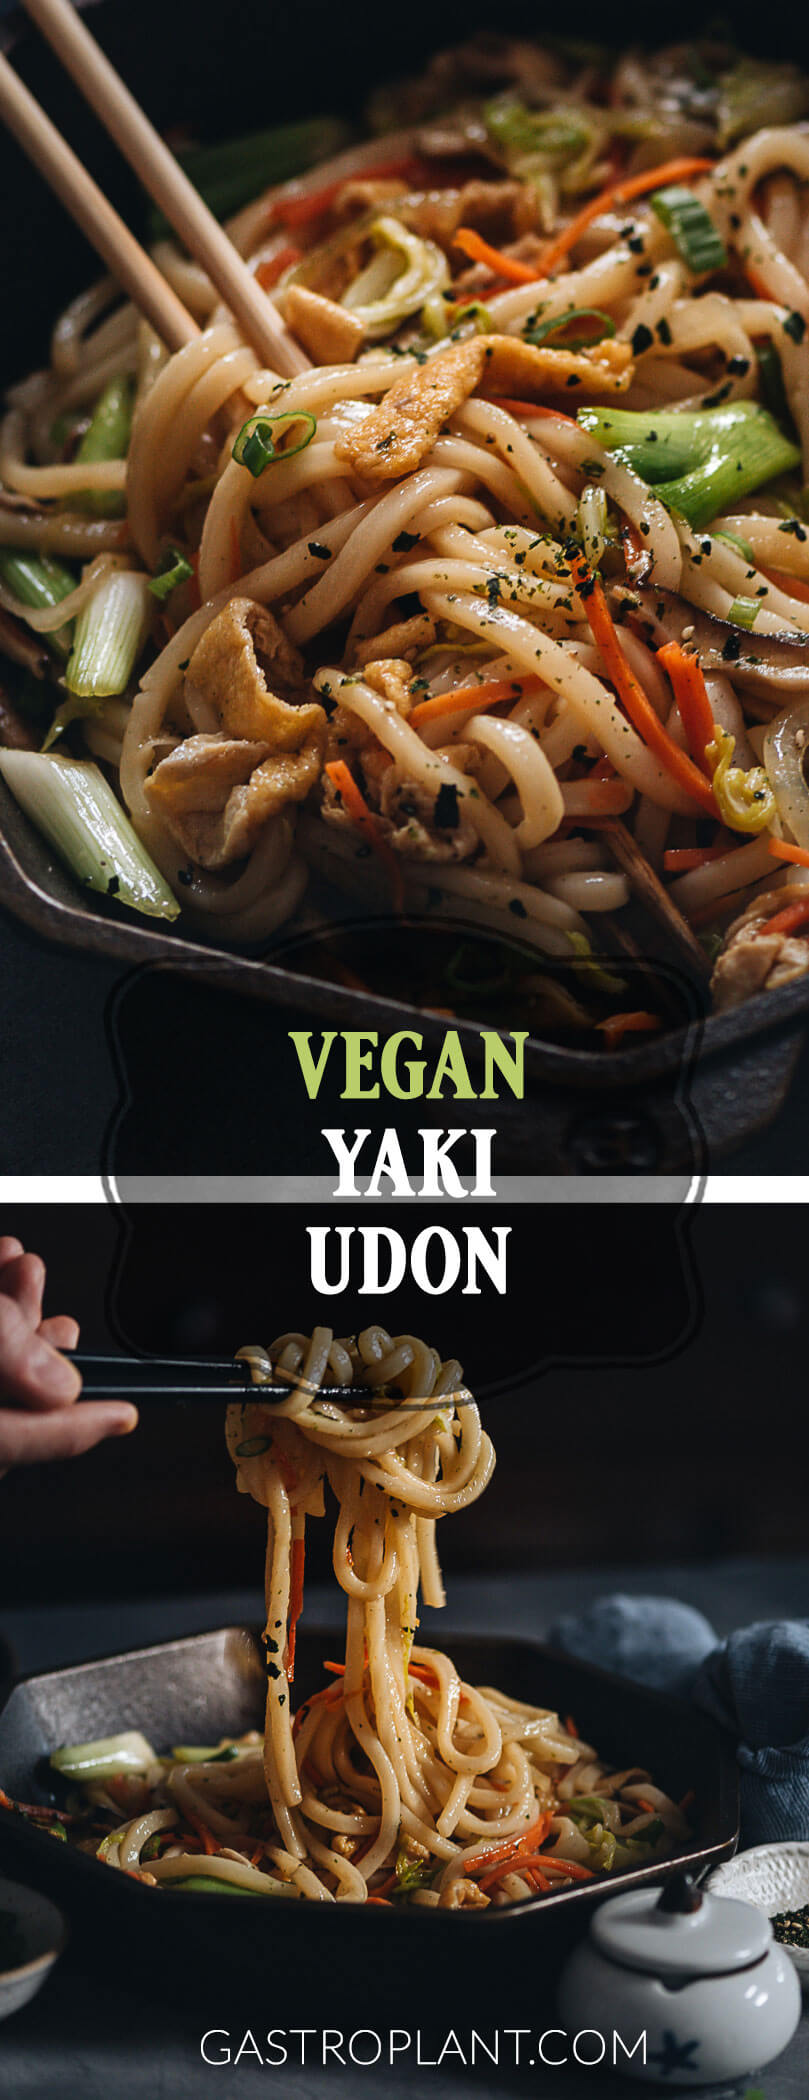 Vegan Yaki Udon - Gastroplant